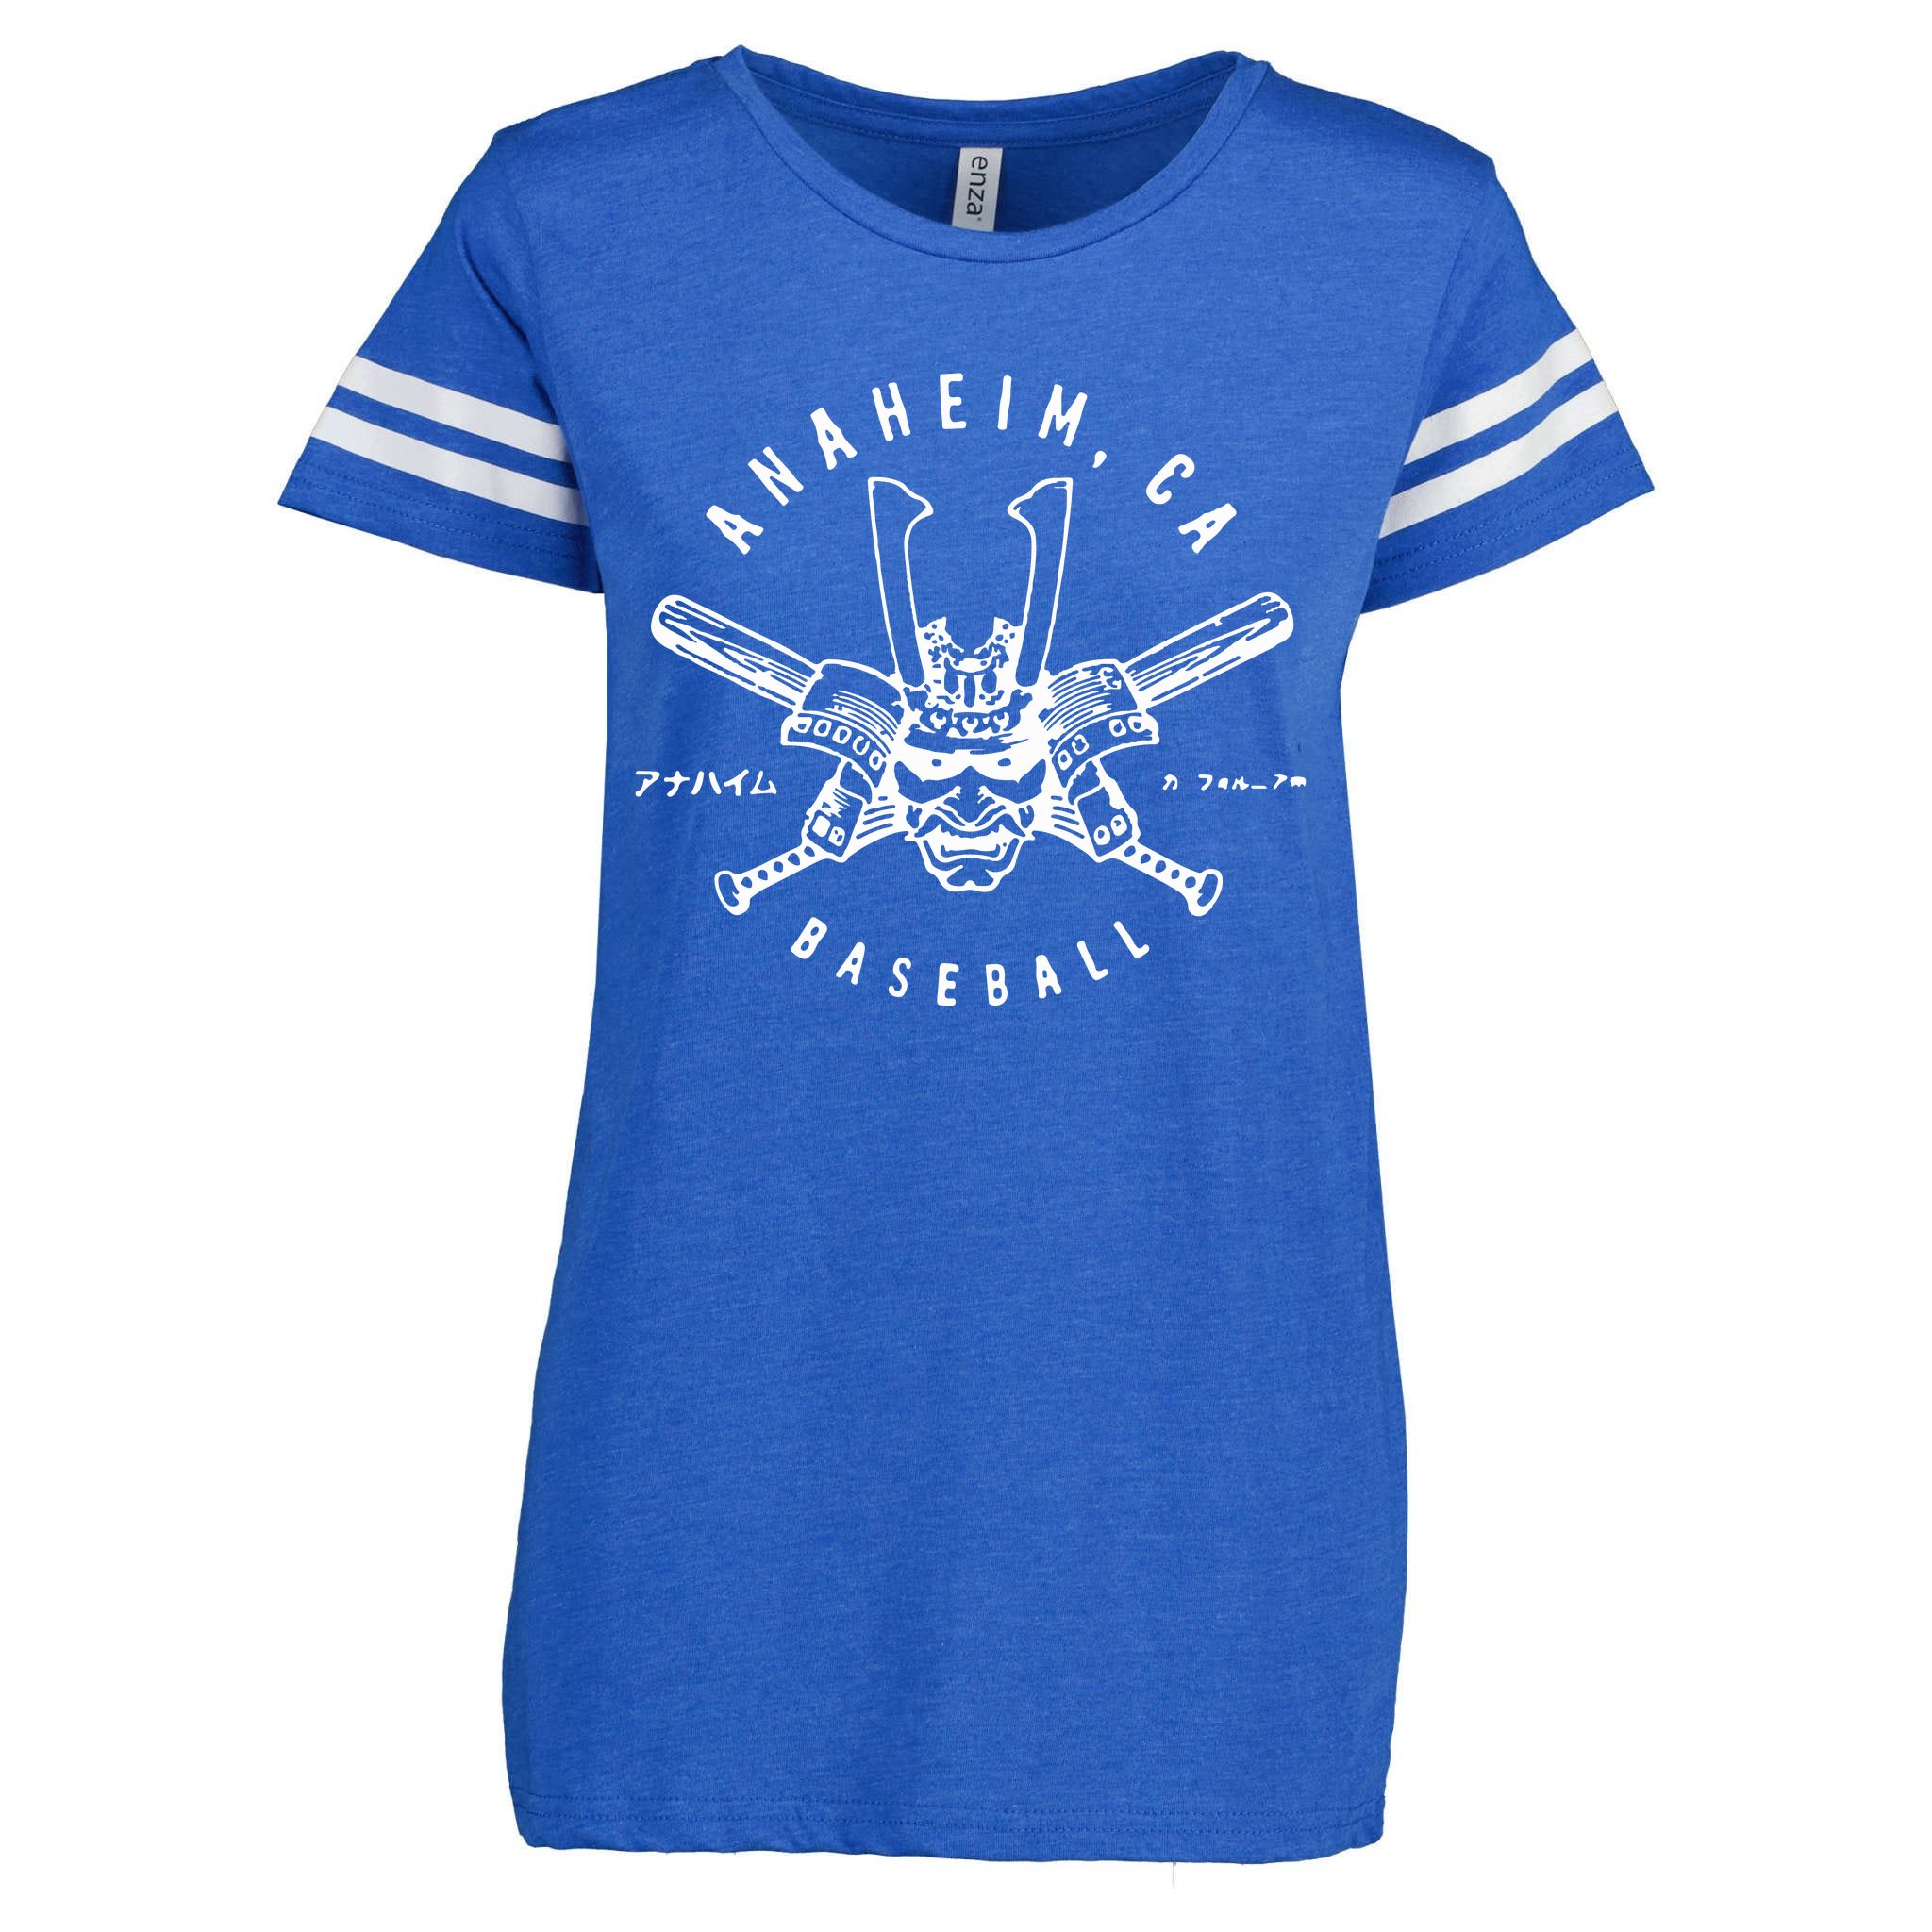 Women’s XS Anaheim ANGELS BASEBALL T-Shirt Genuine Merchandise